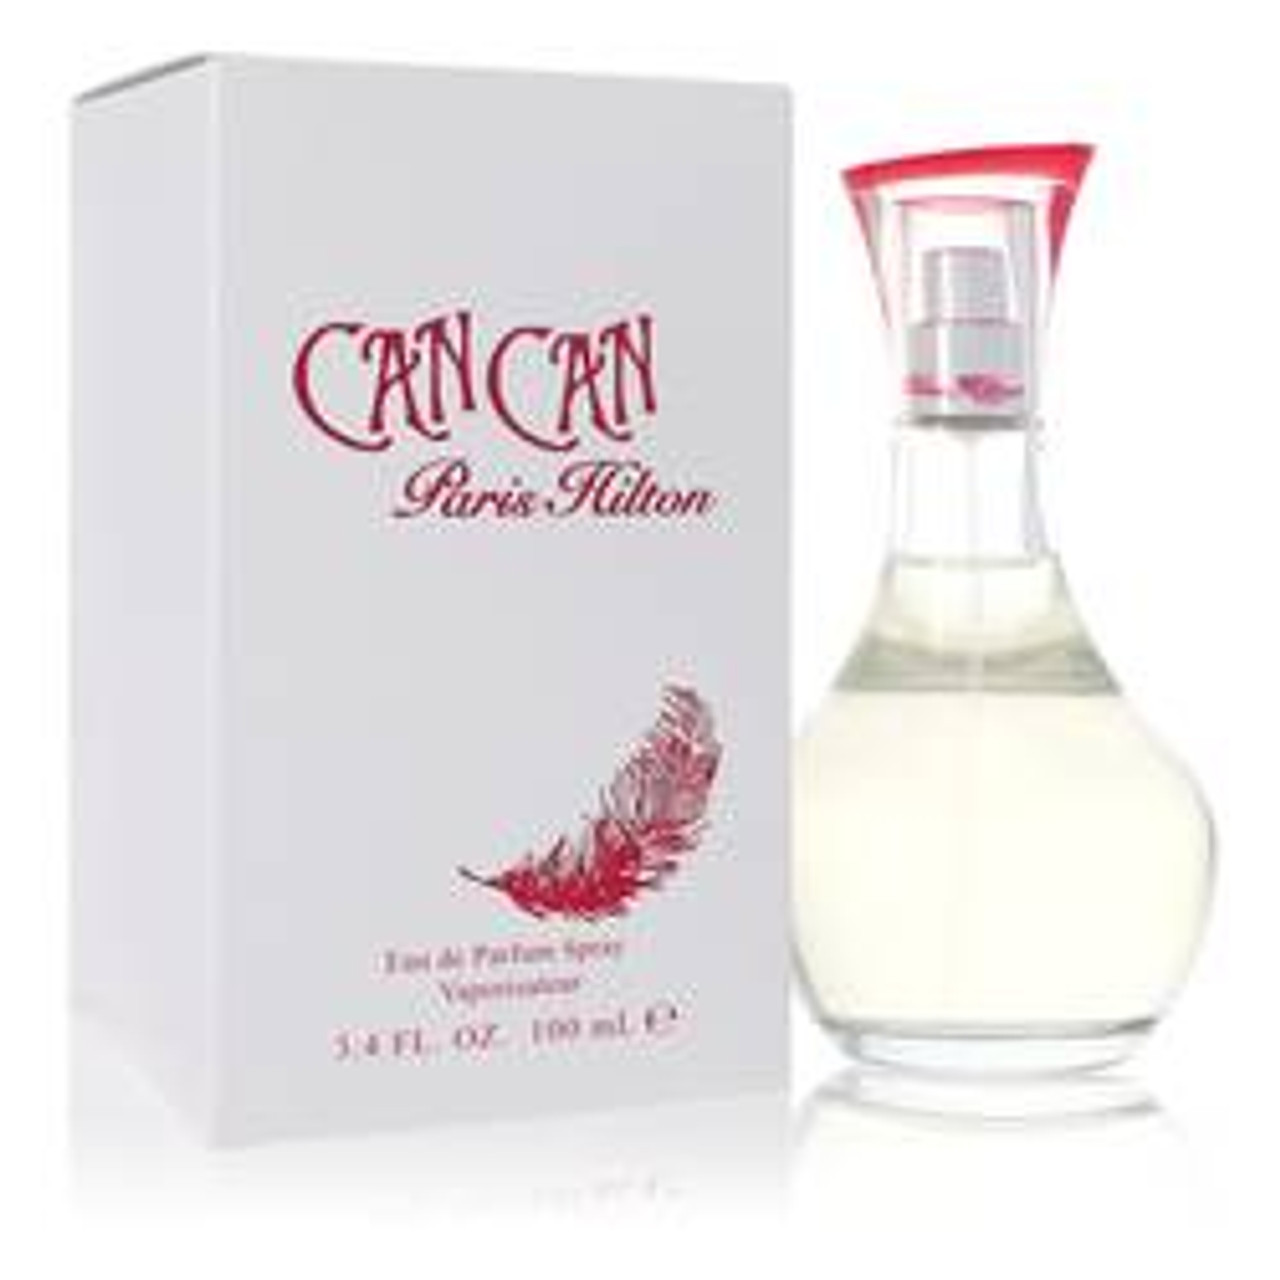 Can Can Perfume By Paris Hilton Eau De Parfum Spray 3.4 oz for Women - [From 83.00 - Choose pk Qty ] - *Ships from Miami